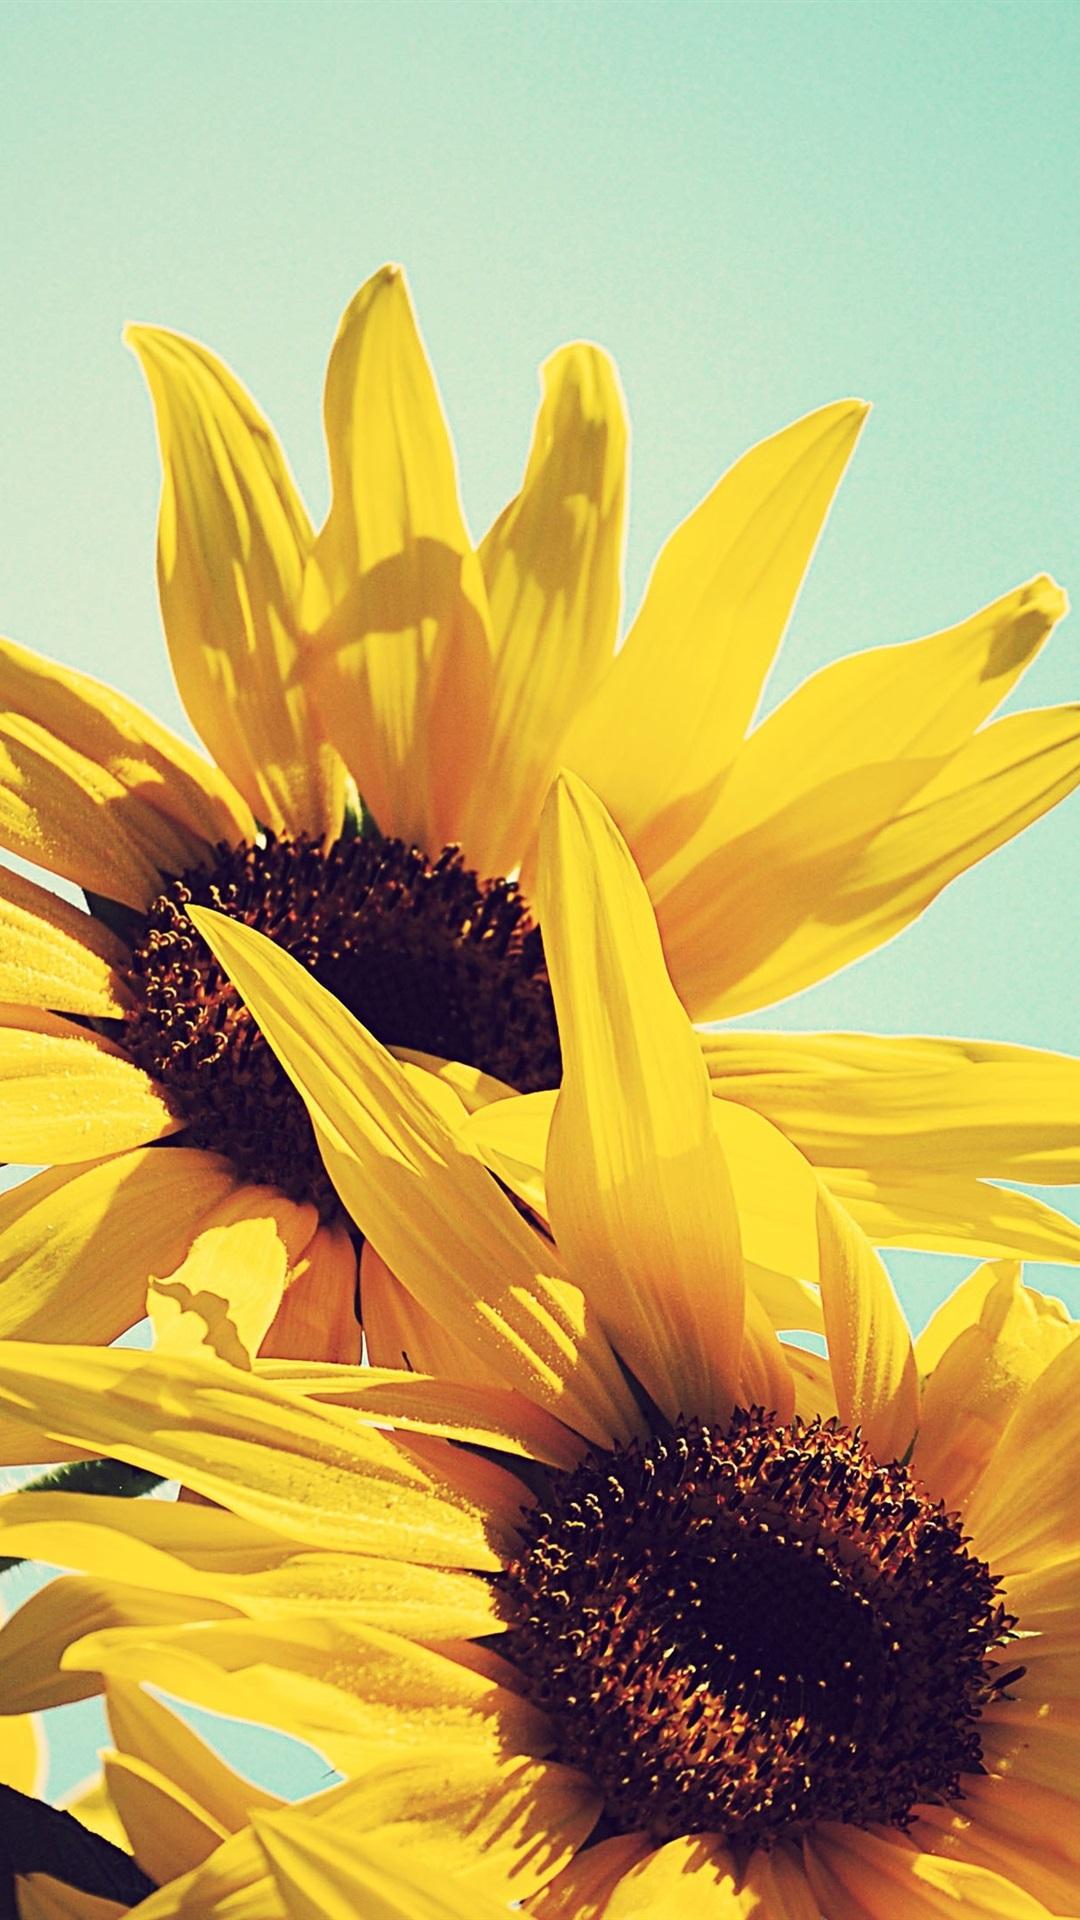 Sunflowers, Yellow Petals, Blue Sky 1080x1920 IPhone 8 7 6 6S Plus